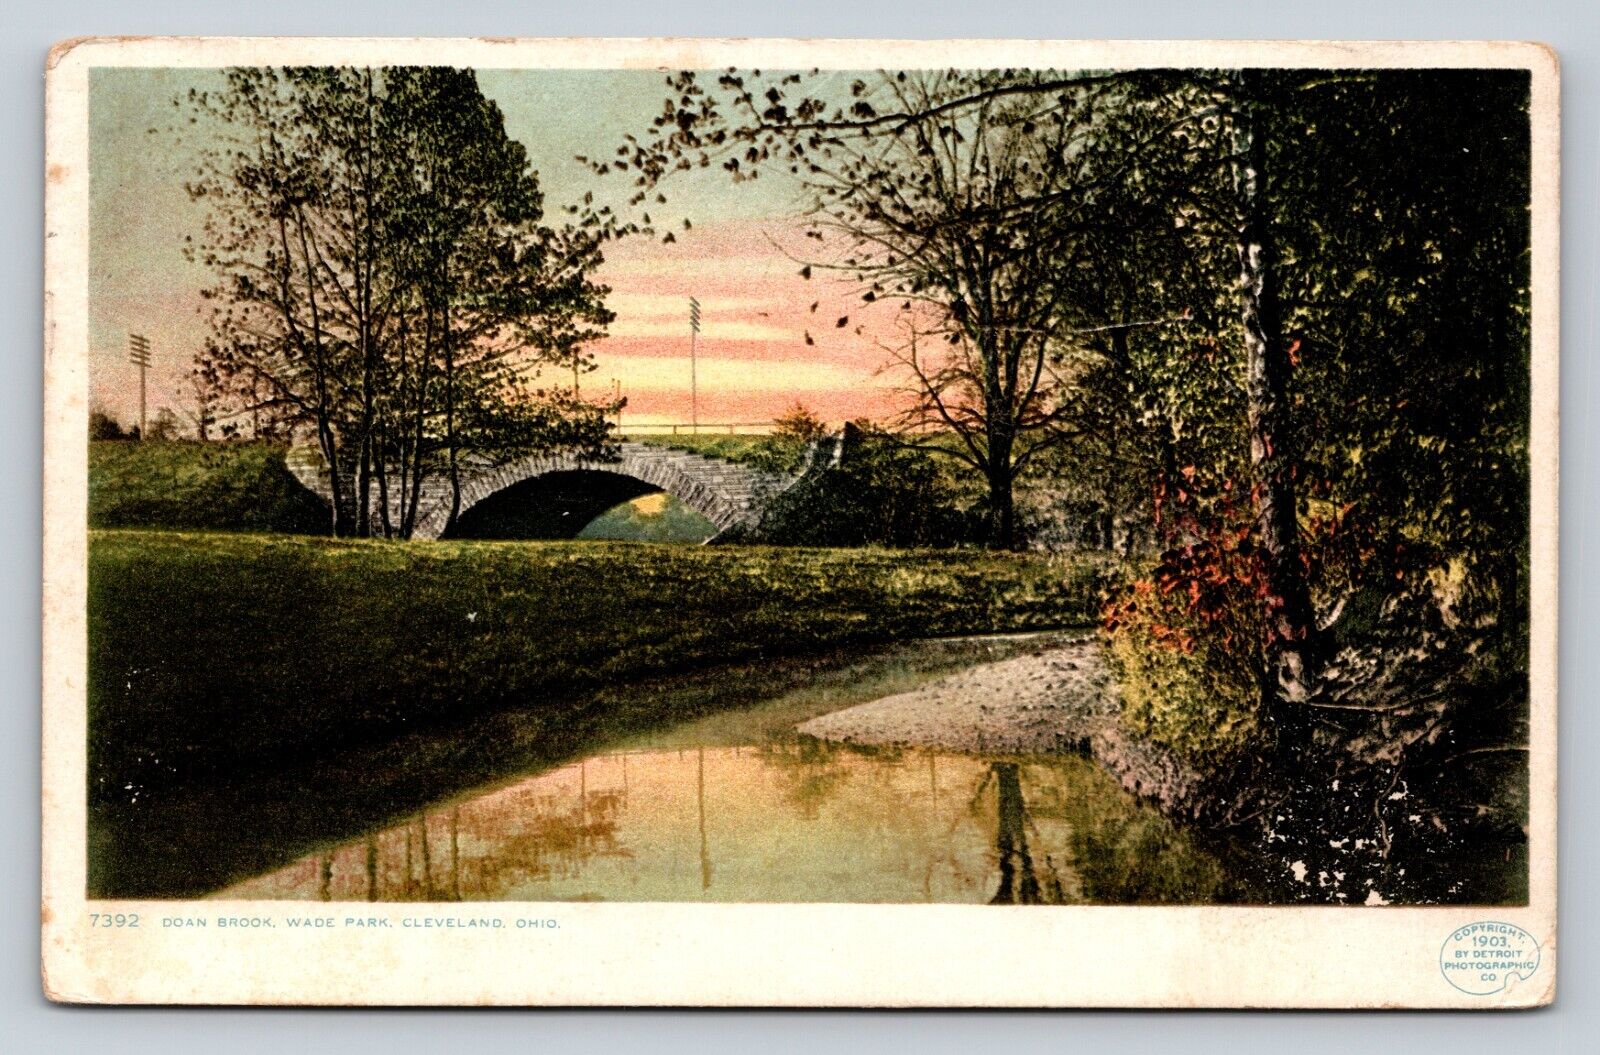 c1908 Doan Brook Wade Park Cleveland Ohio ANTIQUE Postcard 1714